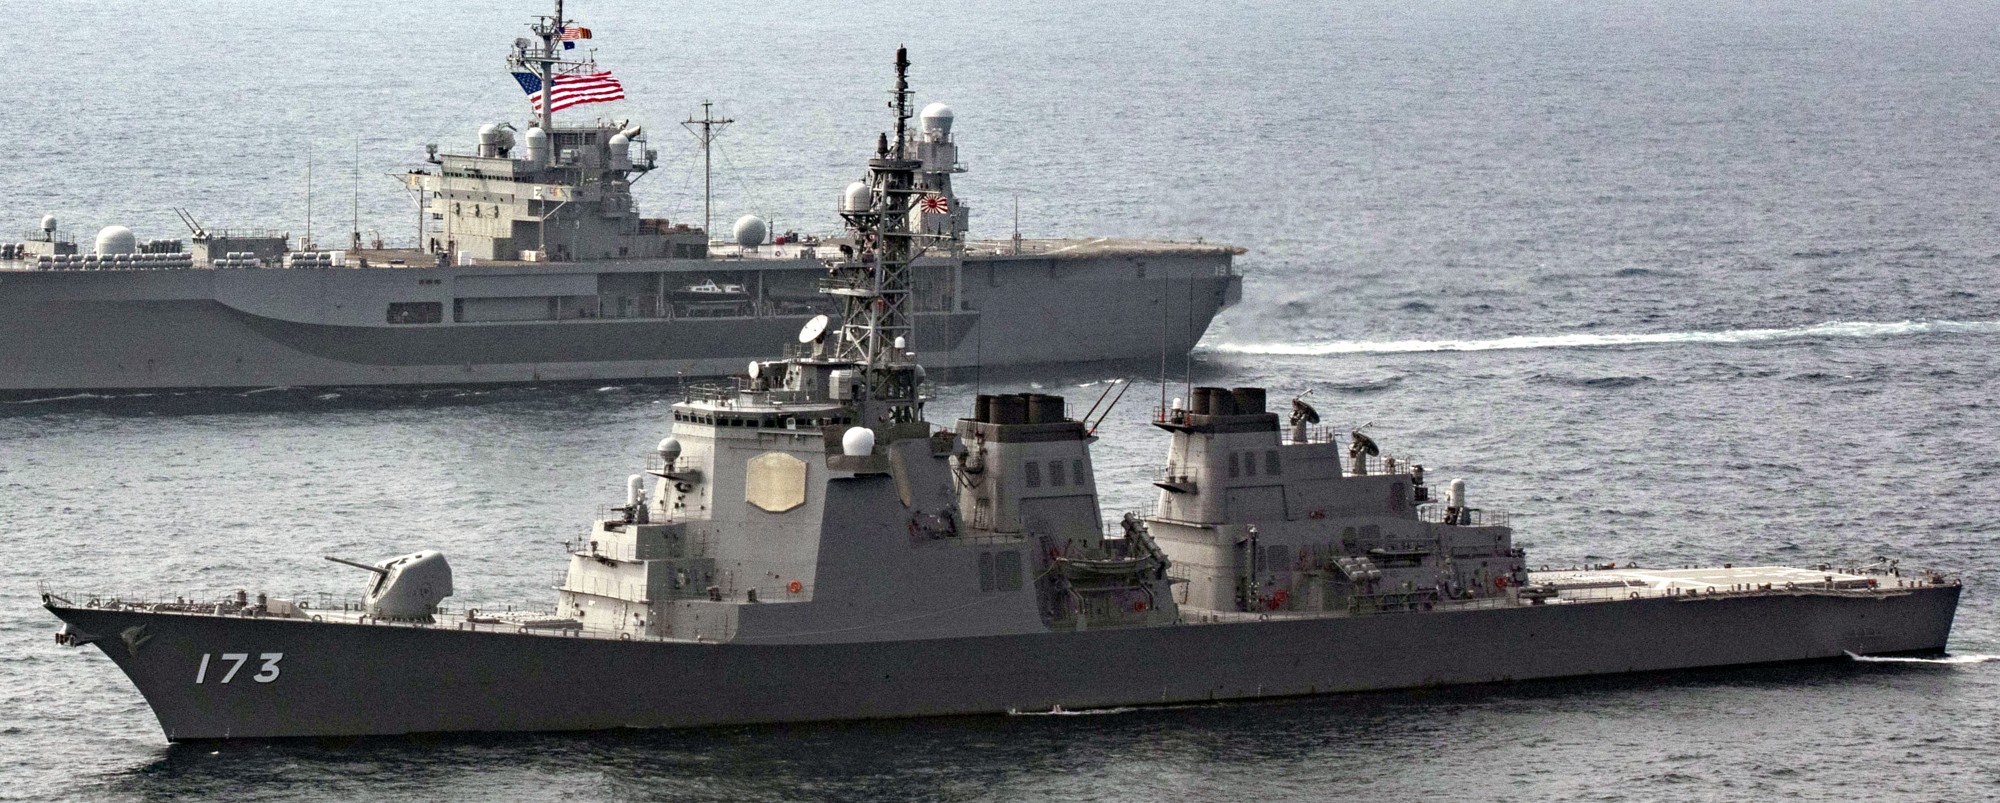 ddg-173 js kongo class guided missile destroyer aegis japan maritime self defense force jmsdf 32